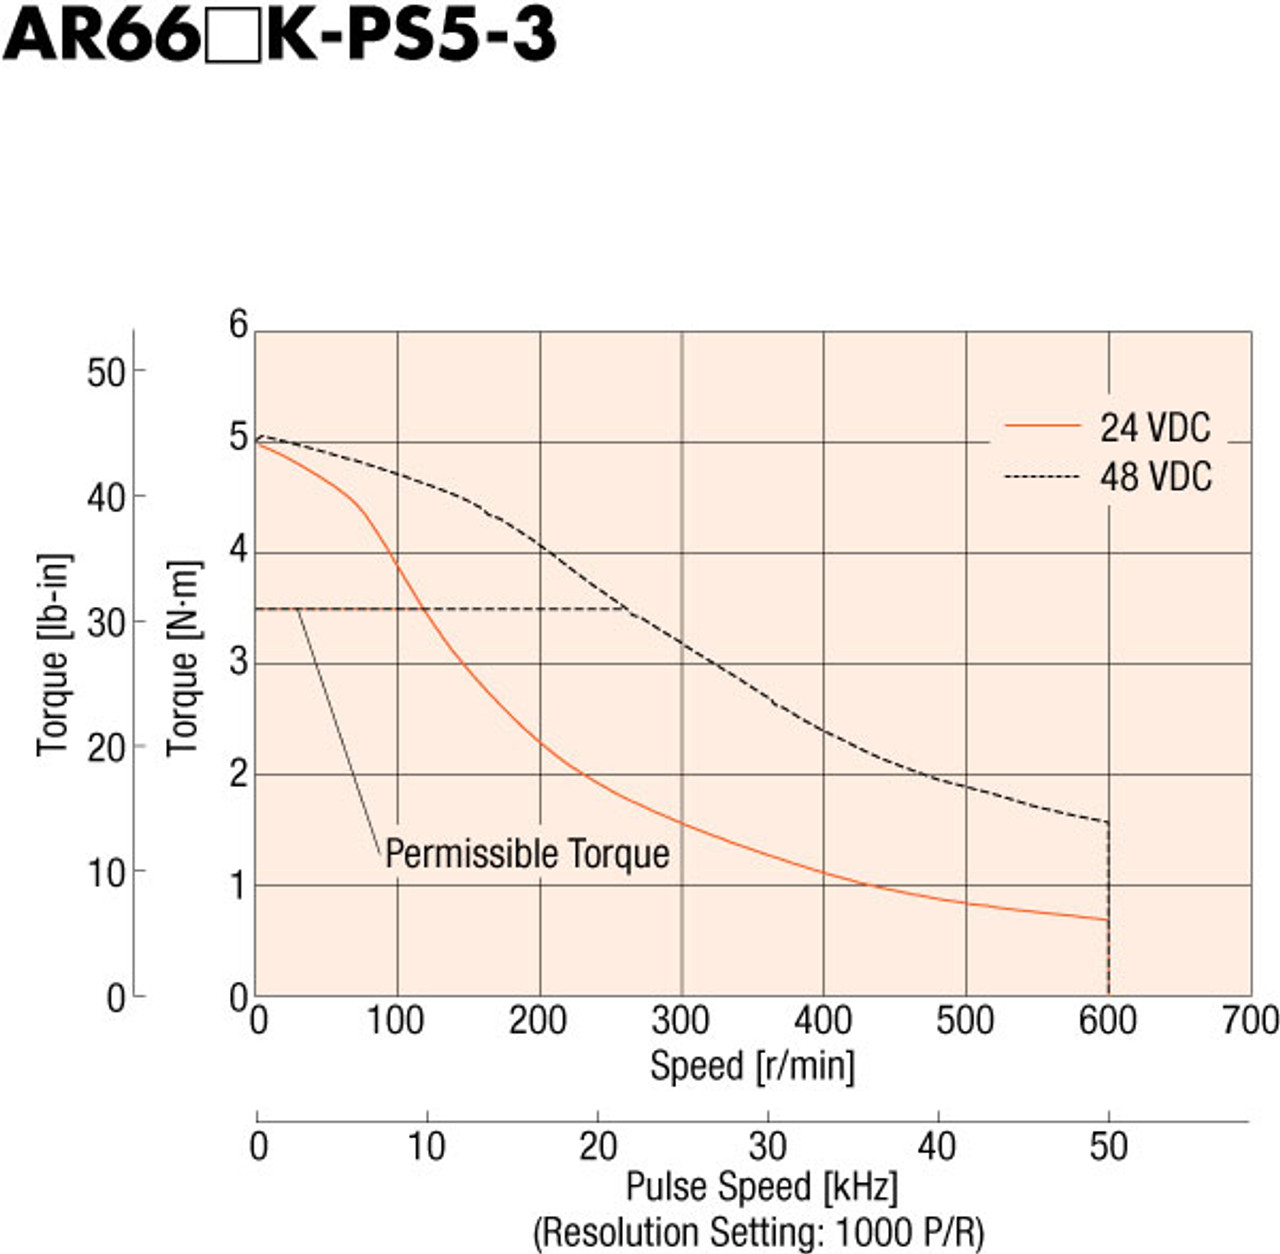 AR66MKD-PS5-3 - Speed-Torque